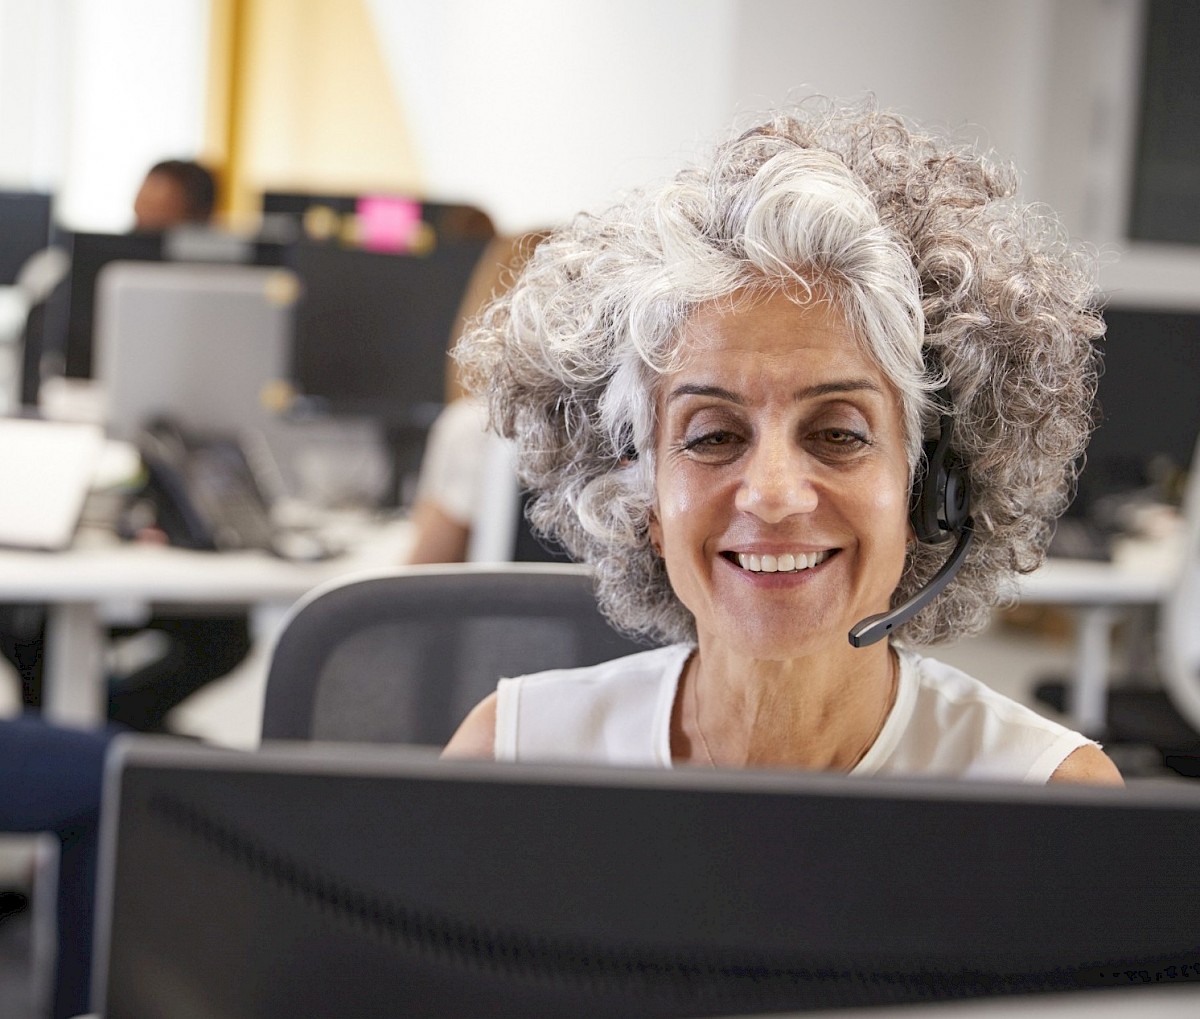 Customer sservice agent, femal, grey hair, smiling.